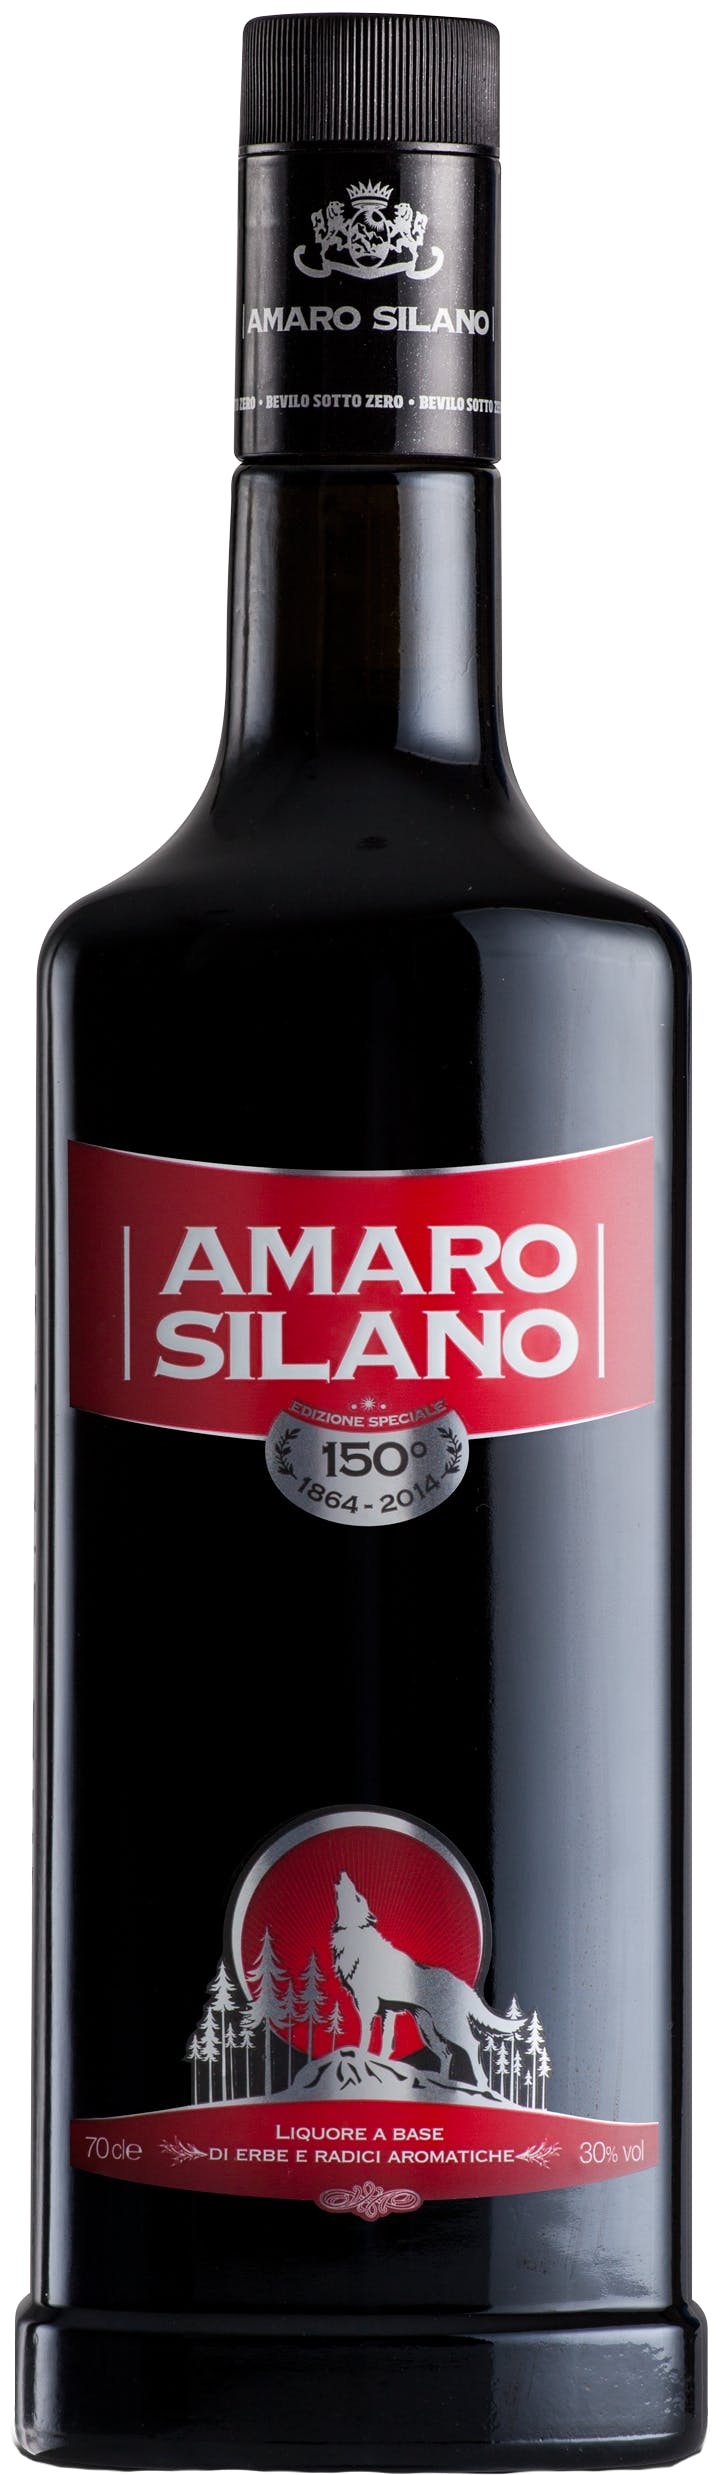 Bosco Liquori Silano Amaro 750ml - Joe Canal's Discount Liquor Outlet